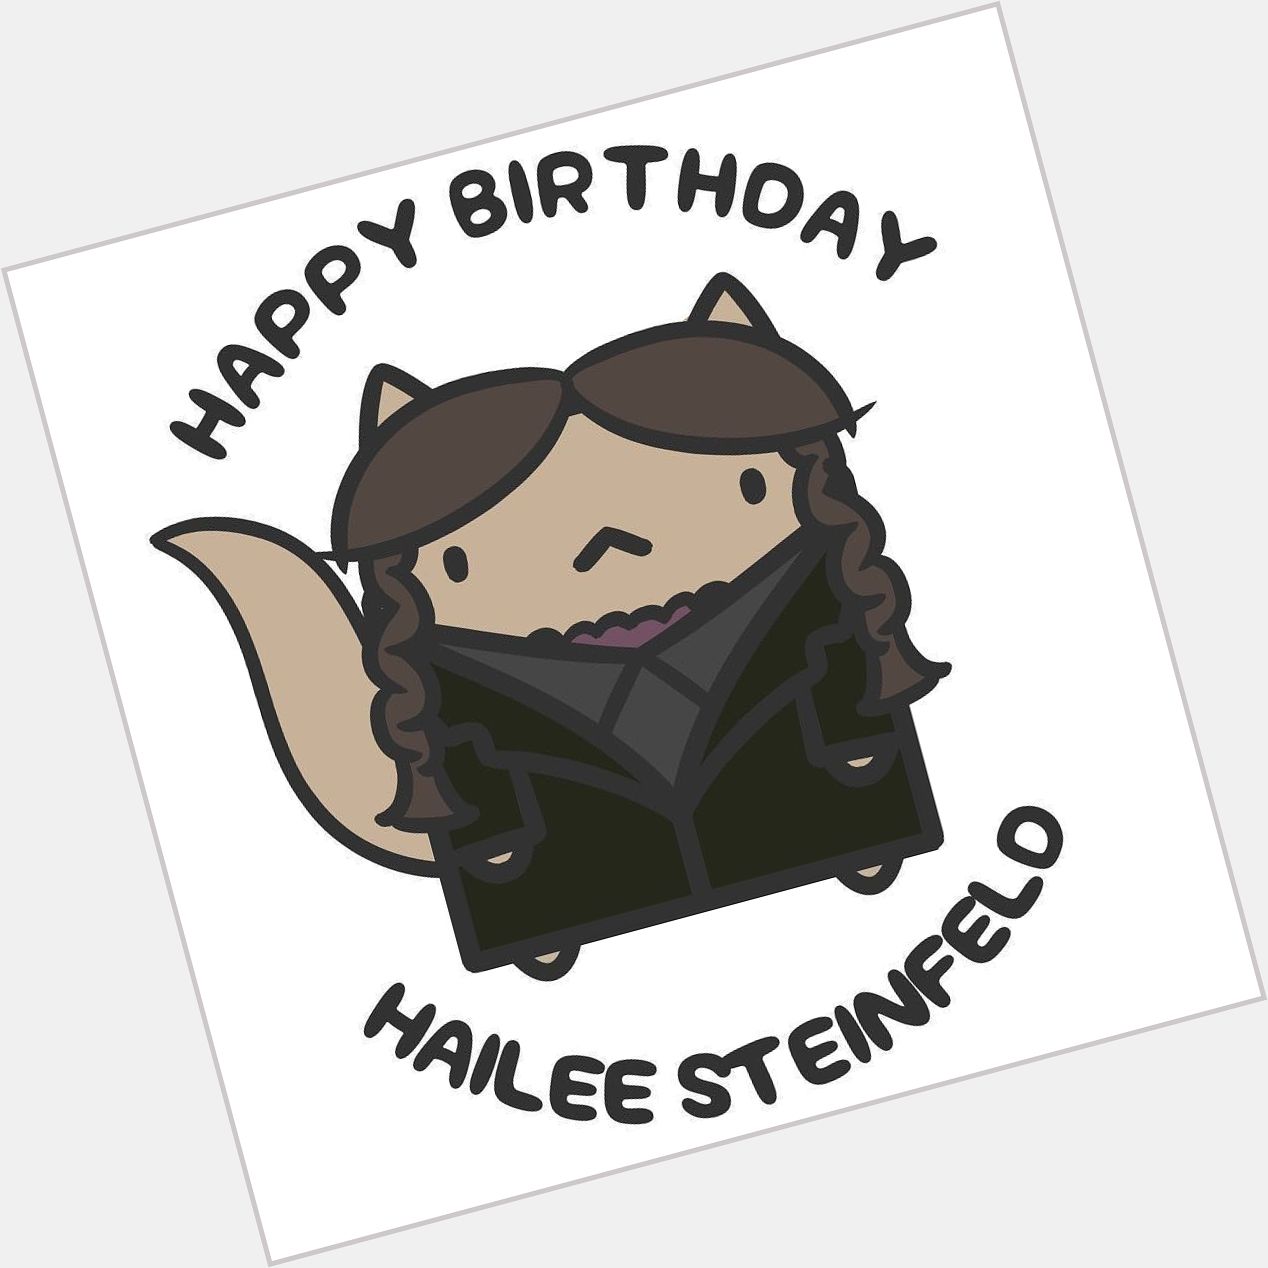 Happy Birthday Hailee Steinfeld! I loooove her performance in True Grit. Fun fact: I reall 